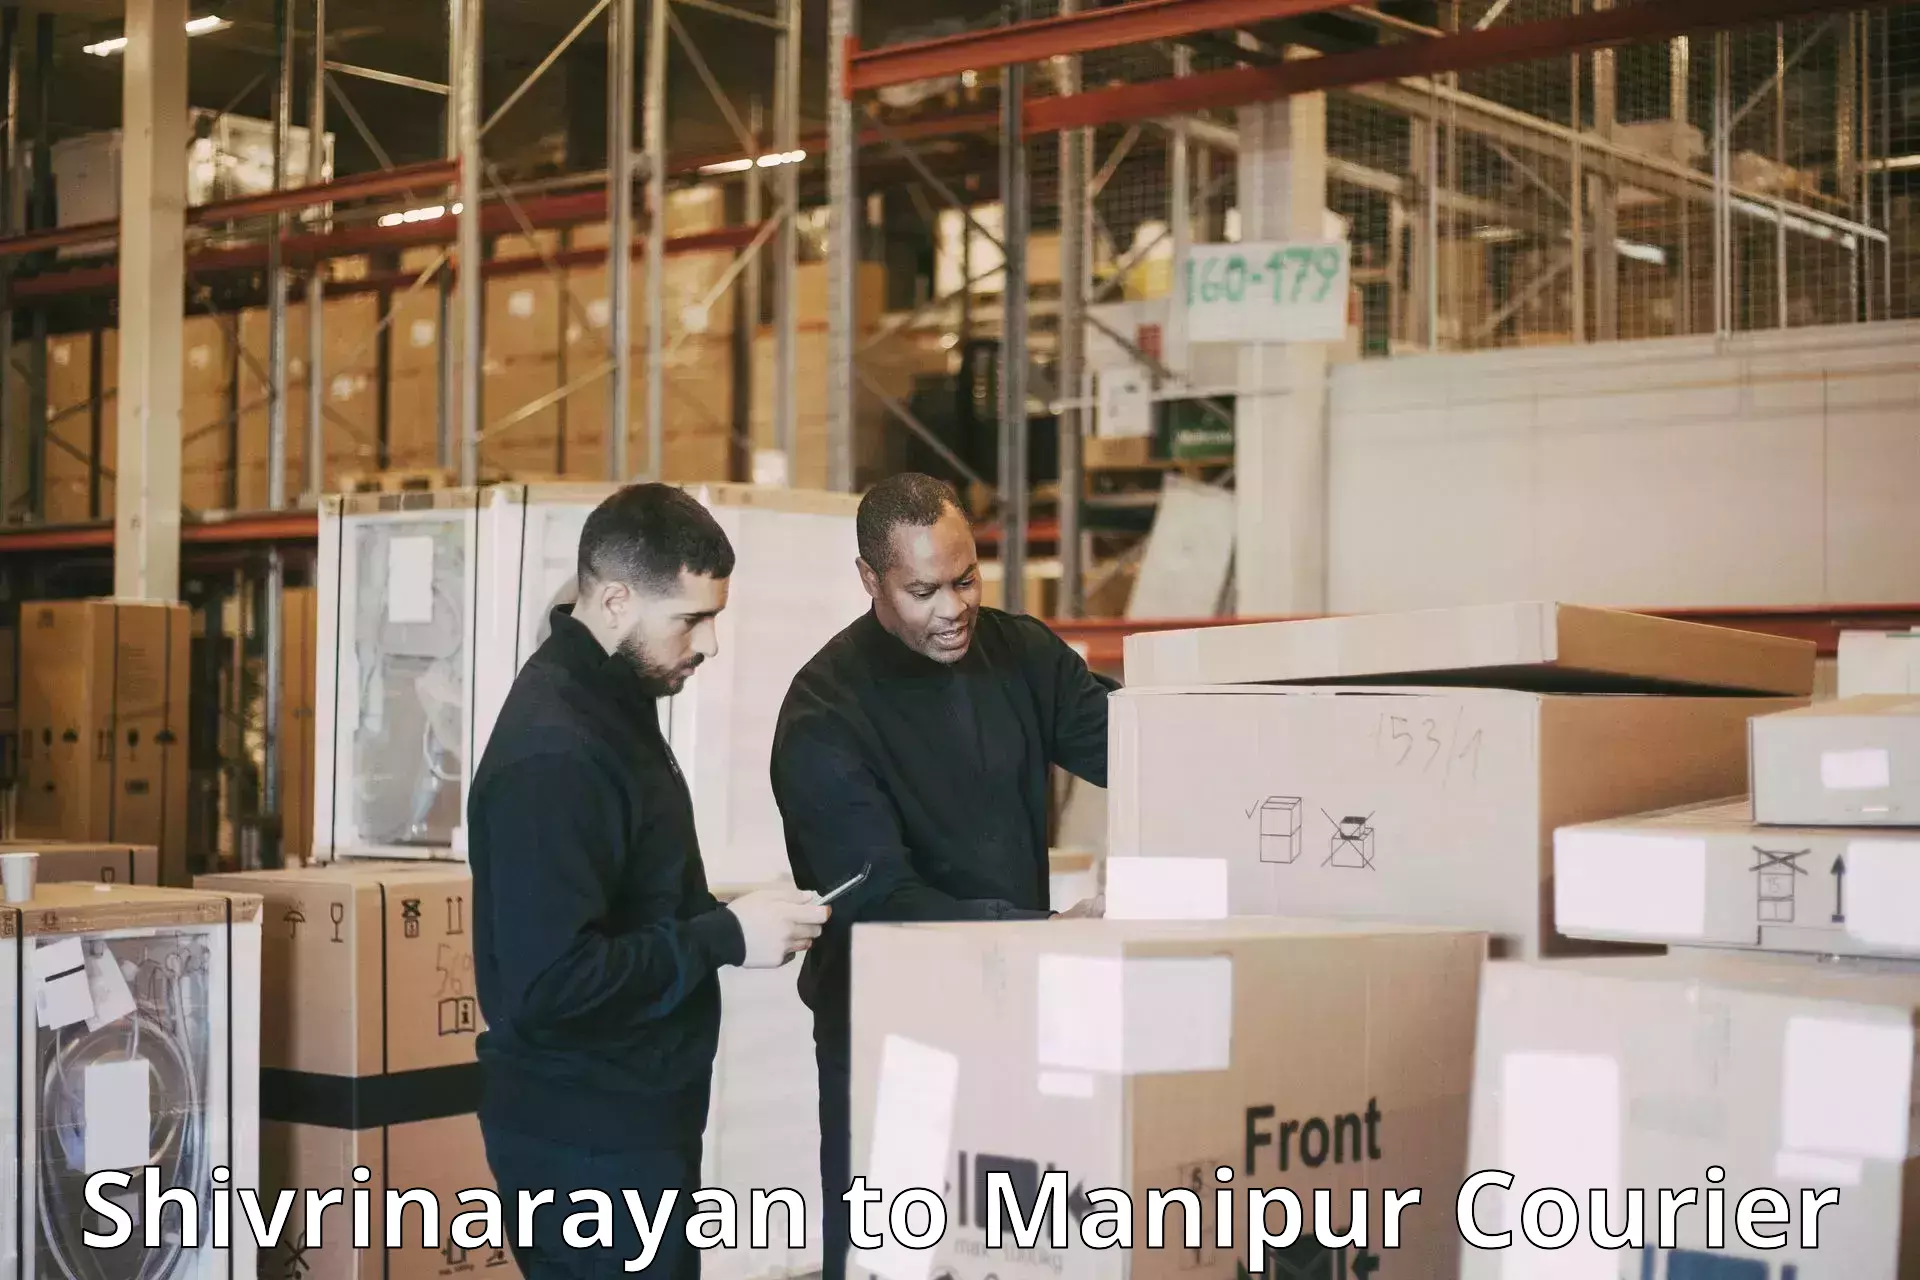 24/7 courier service Shivrinarayan to Manipur